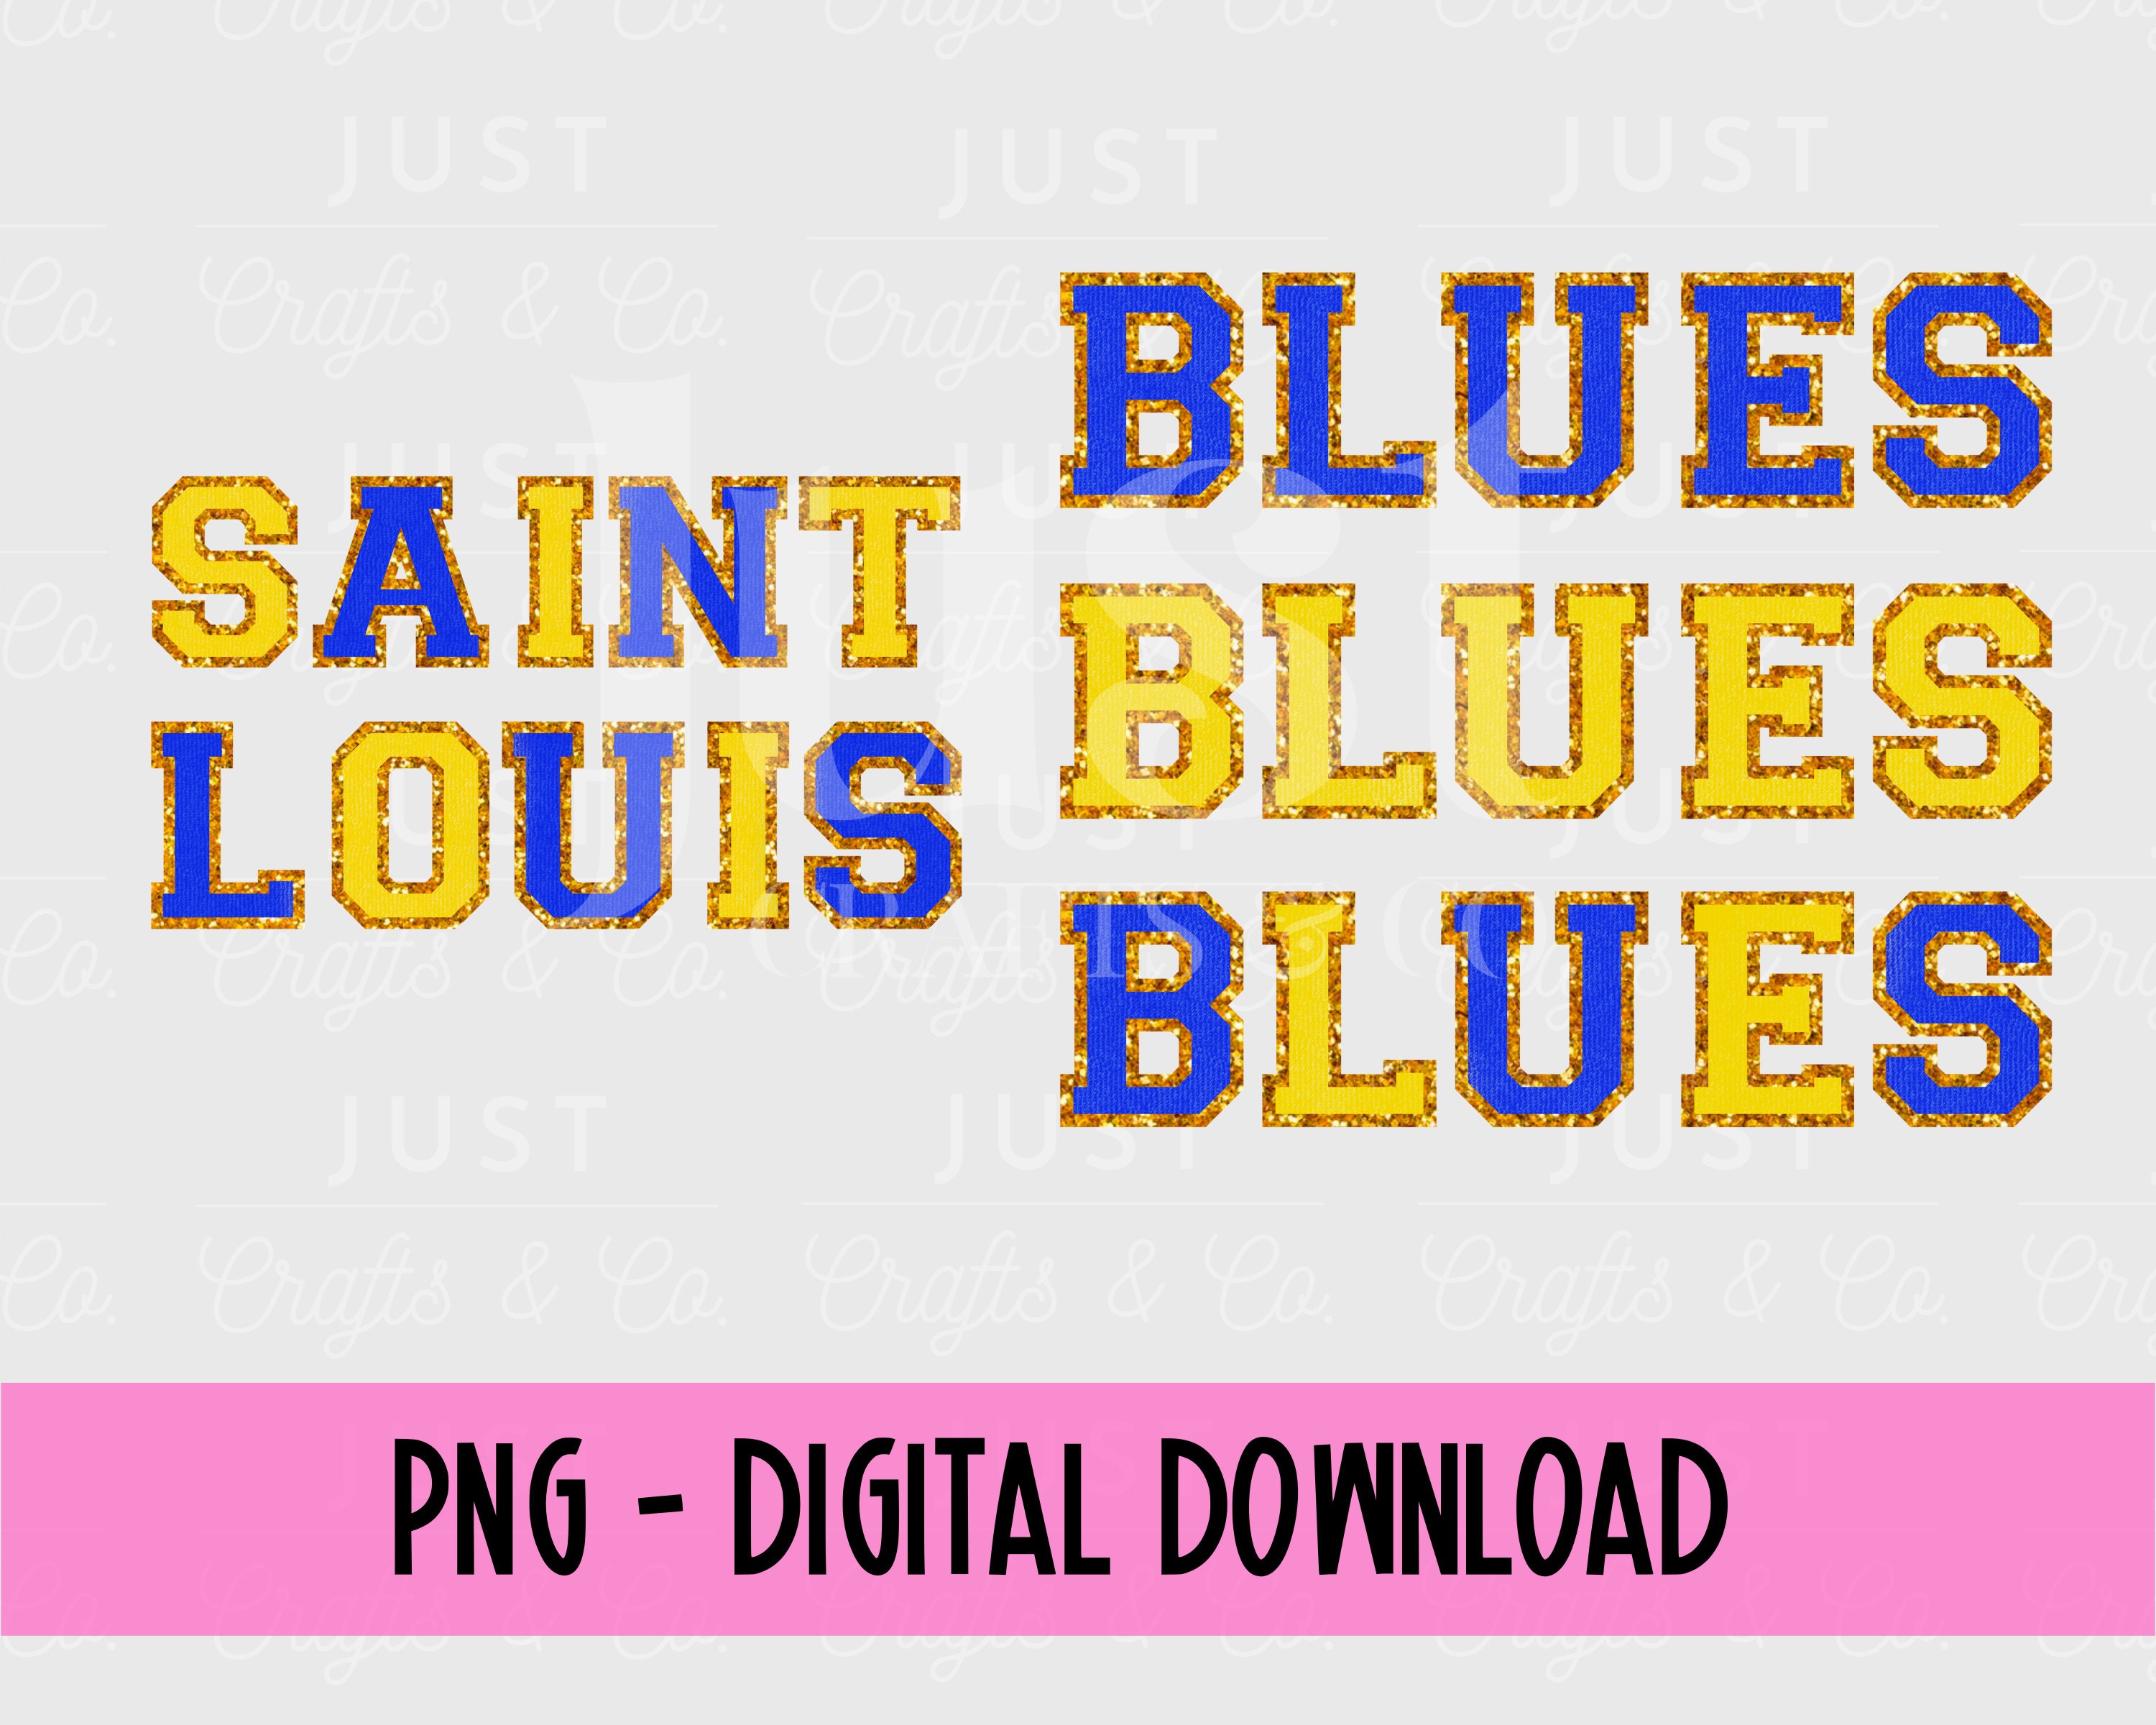 Youth Blue St. Louis Blues Wordmark Logo Pullover Hoodie